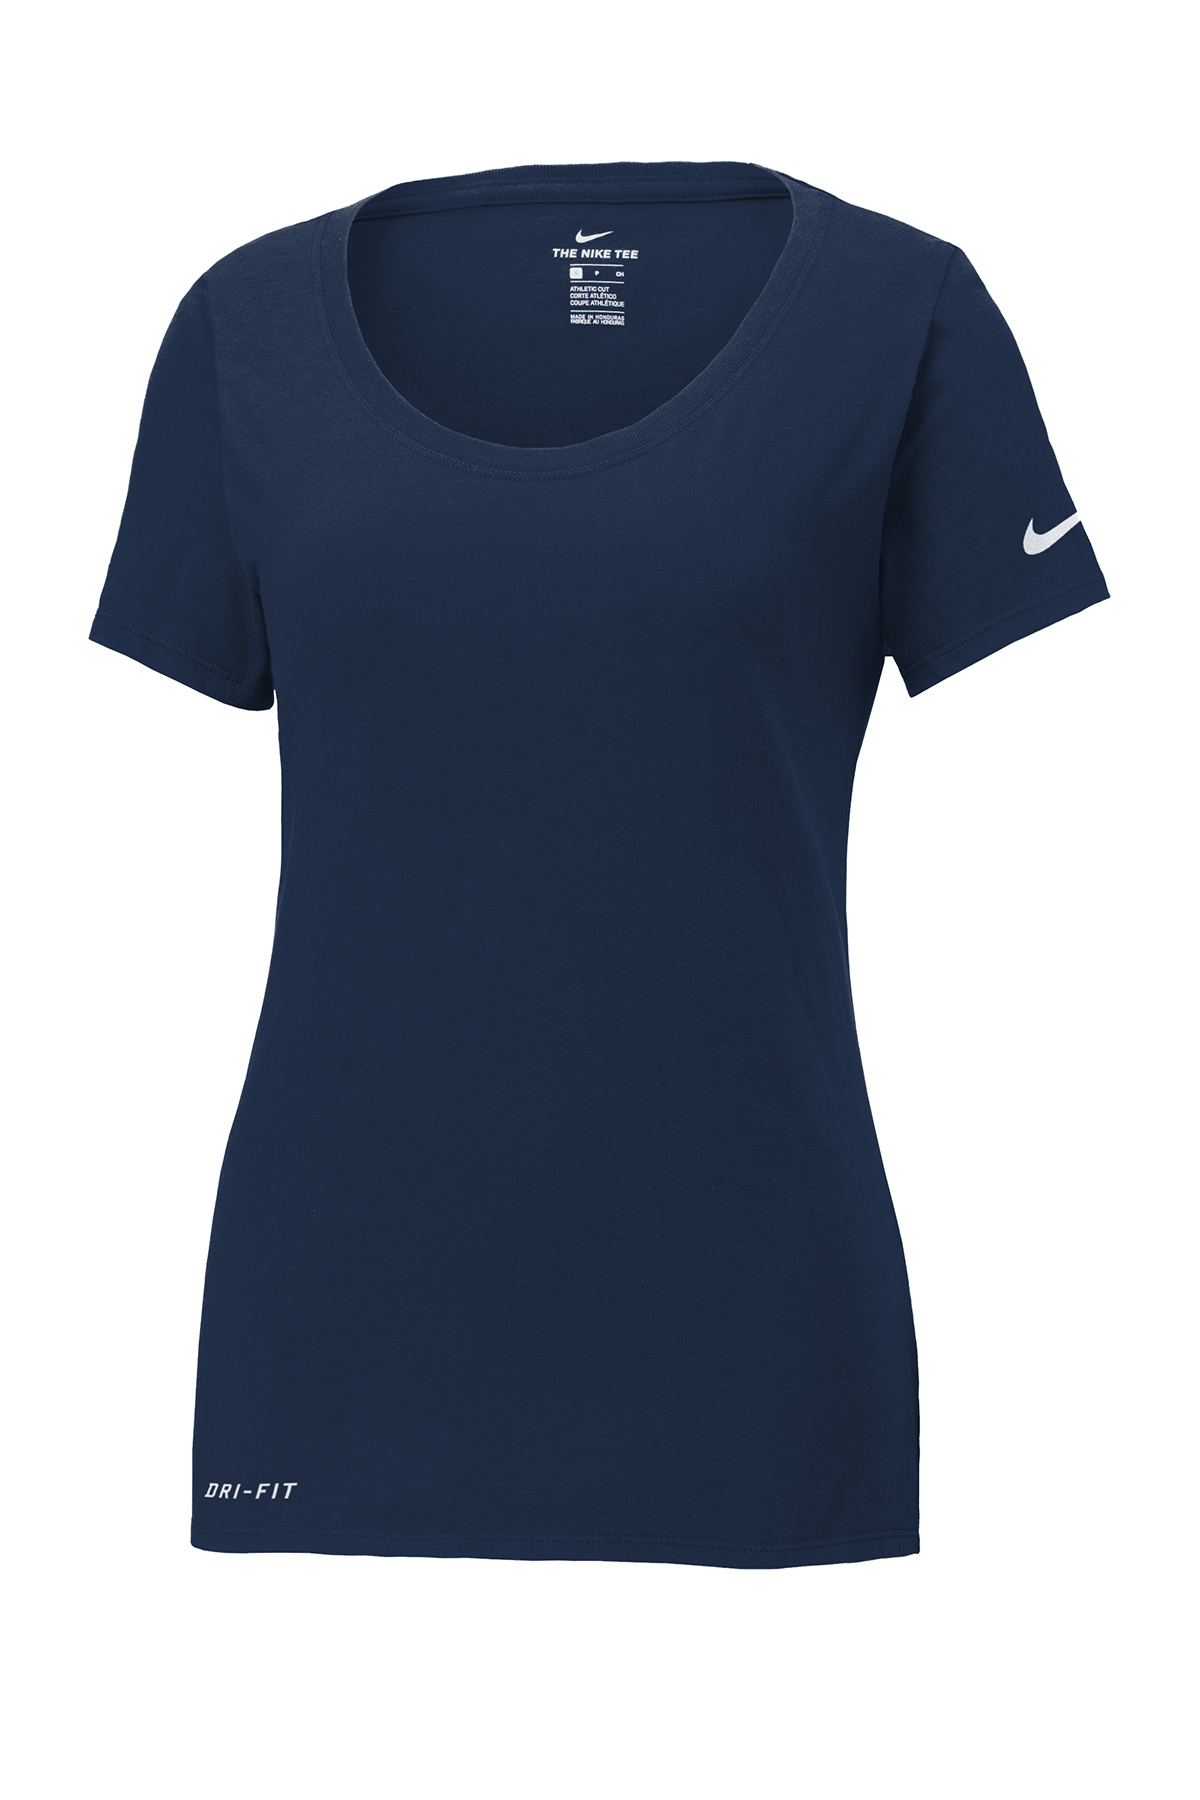 Nike Ladies Dri-FIT Cotton/Poly Scoop Neck Tee | Product | SanMar